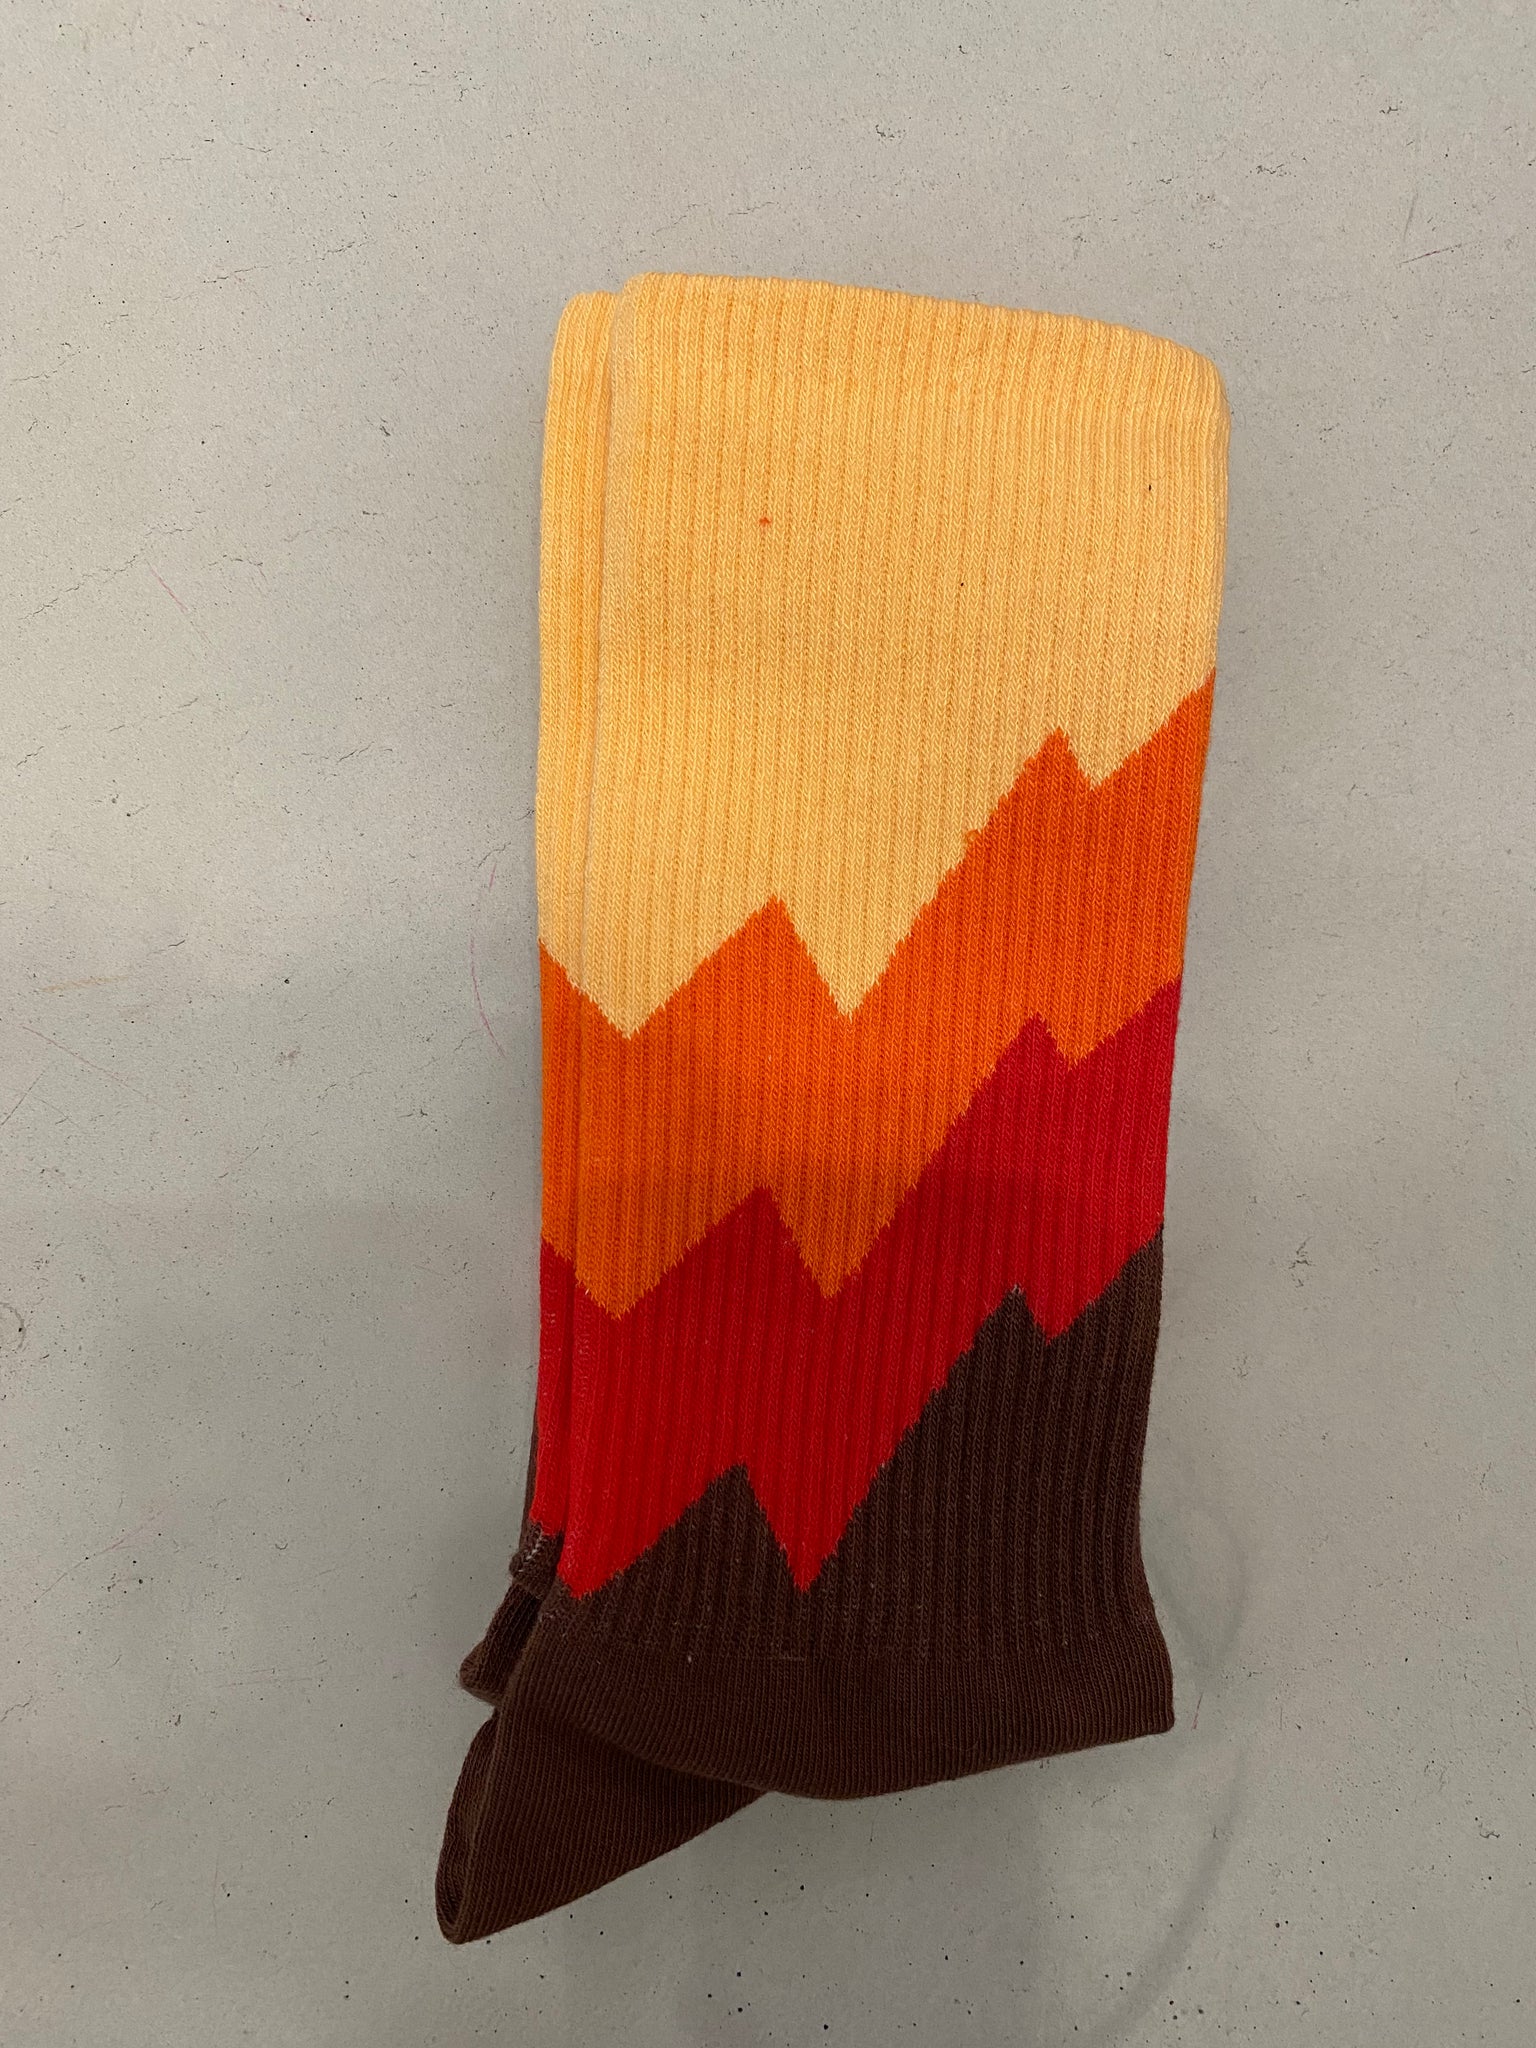 Colorful zig zag socks (four colors)